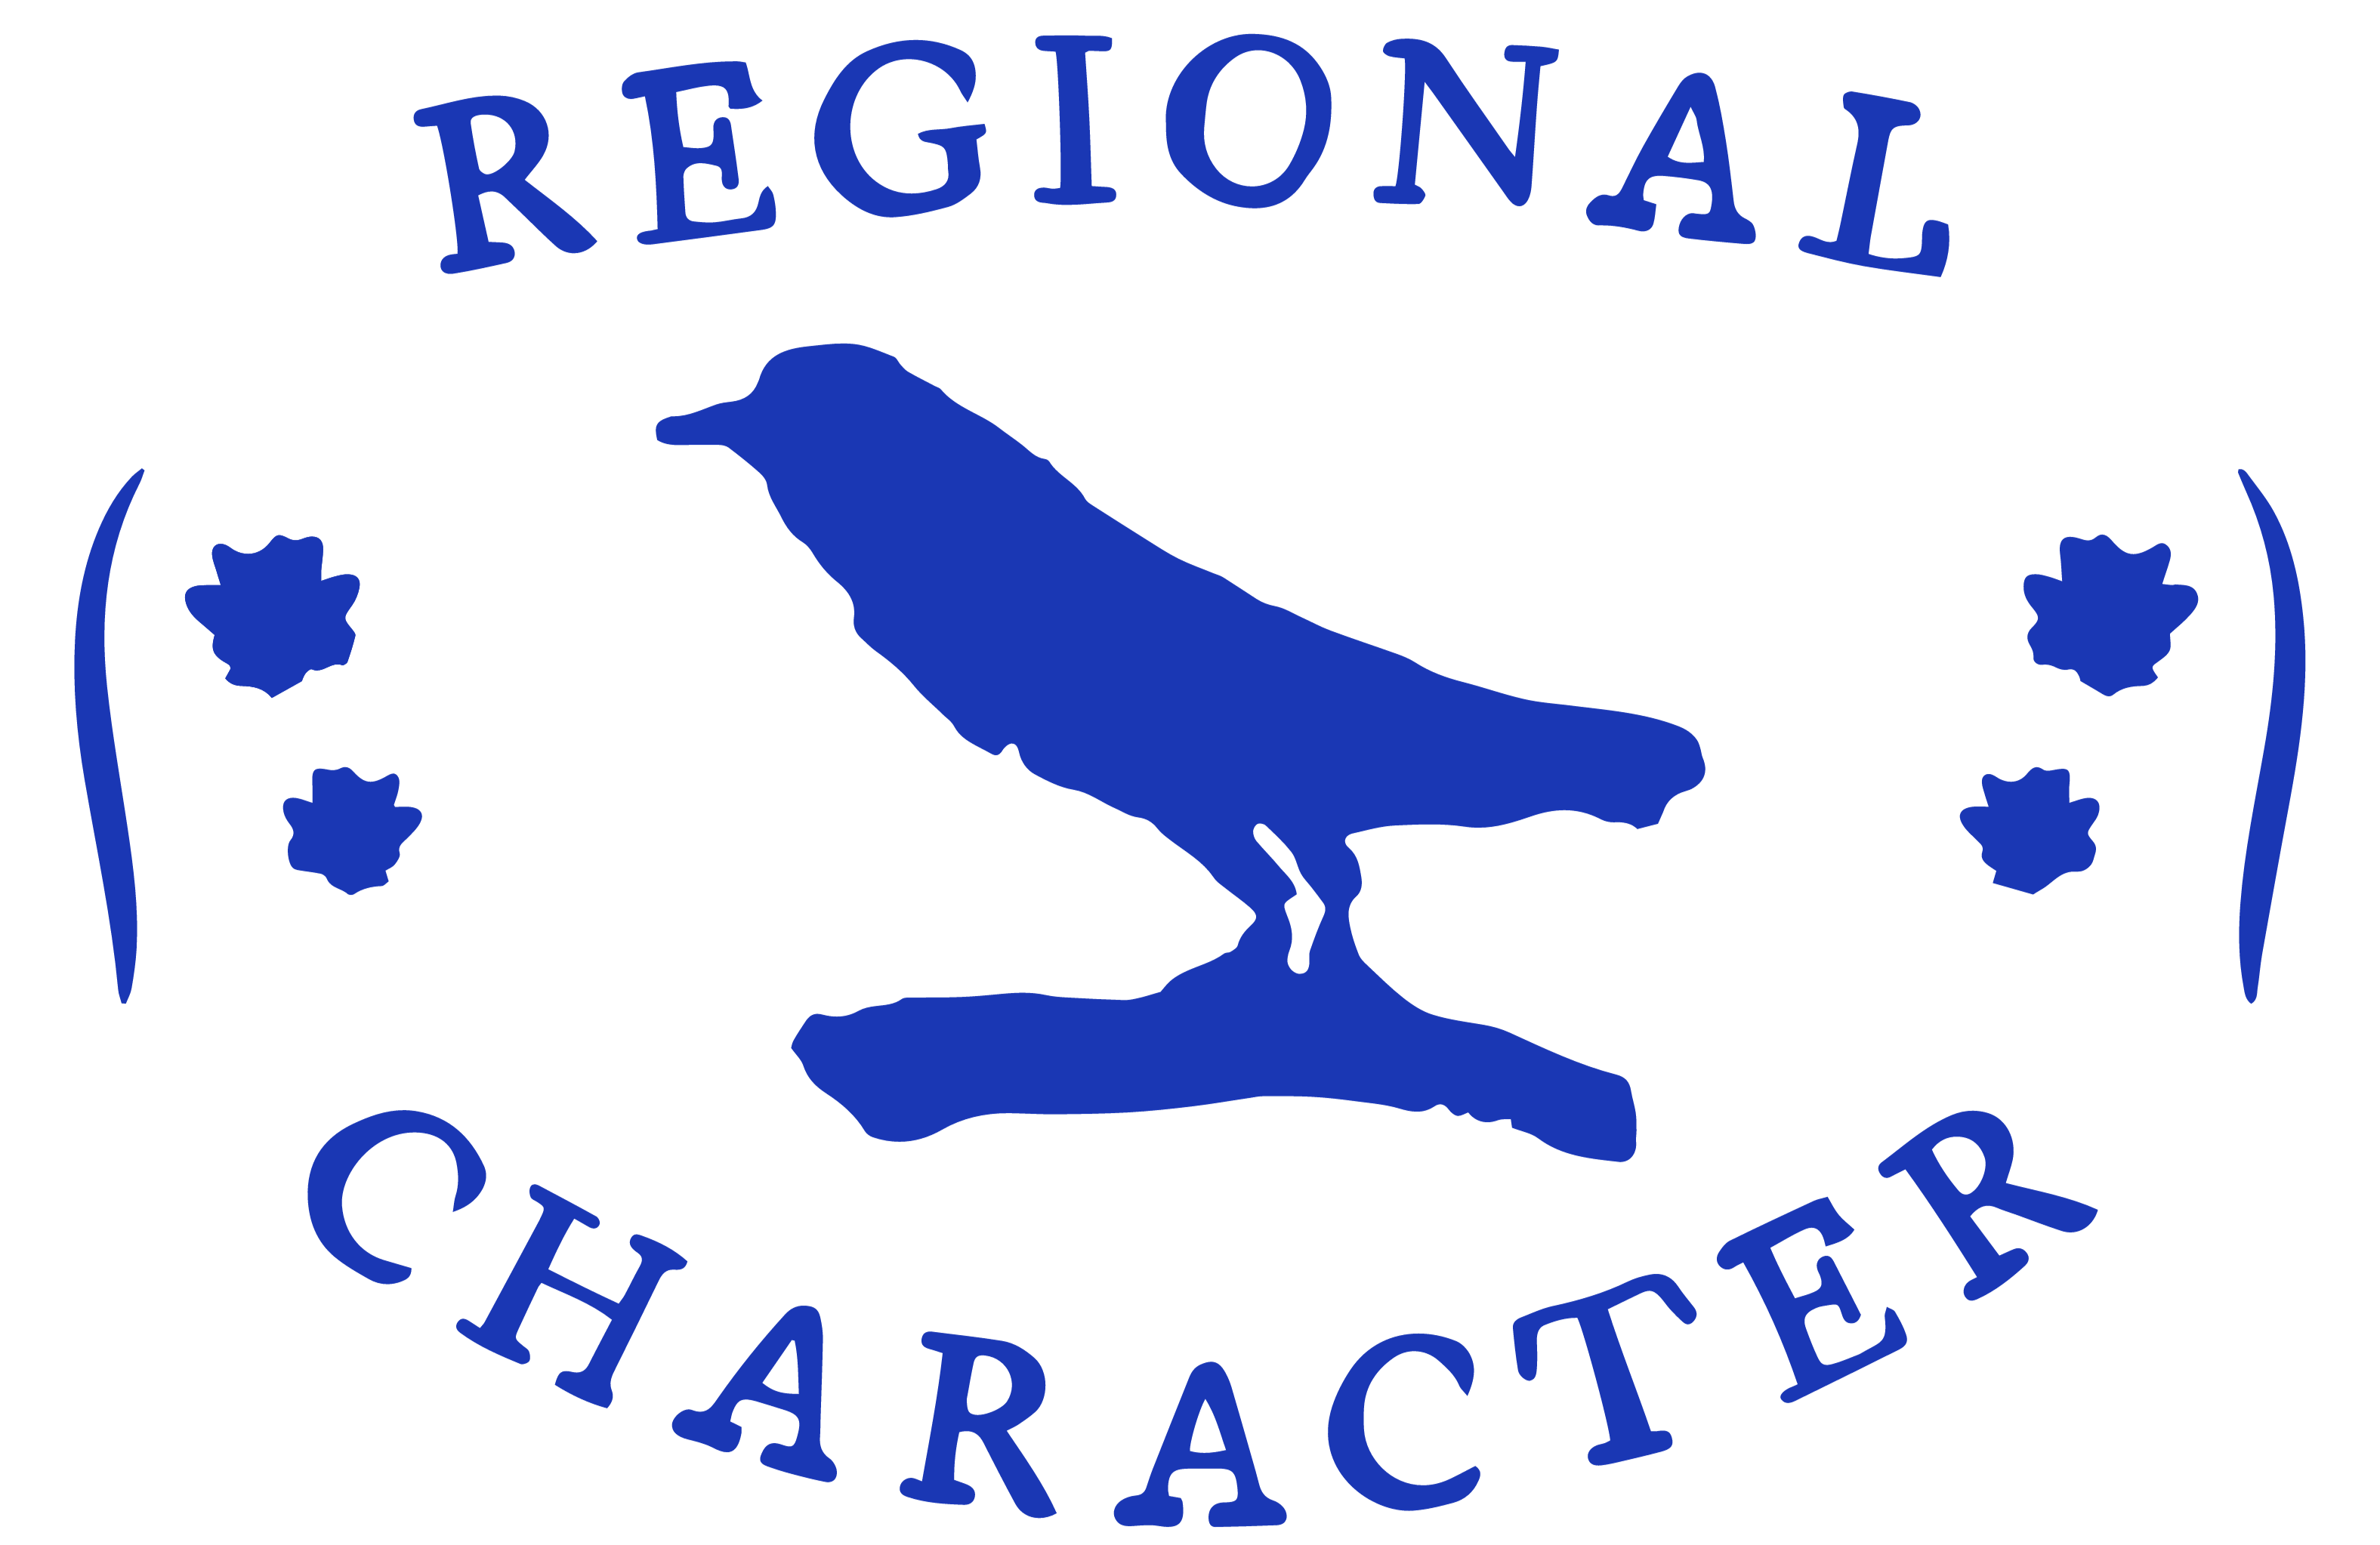 Regional Character